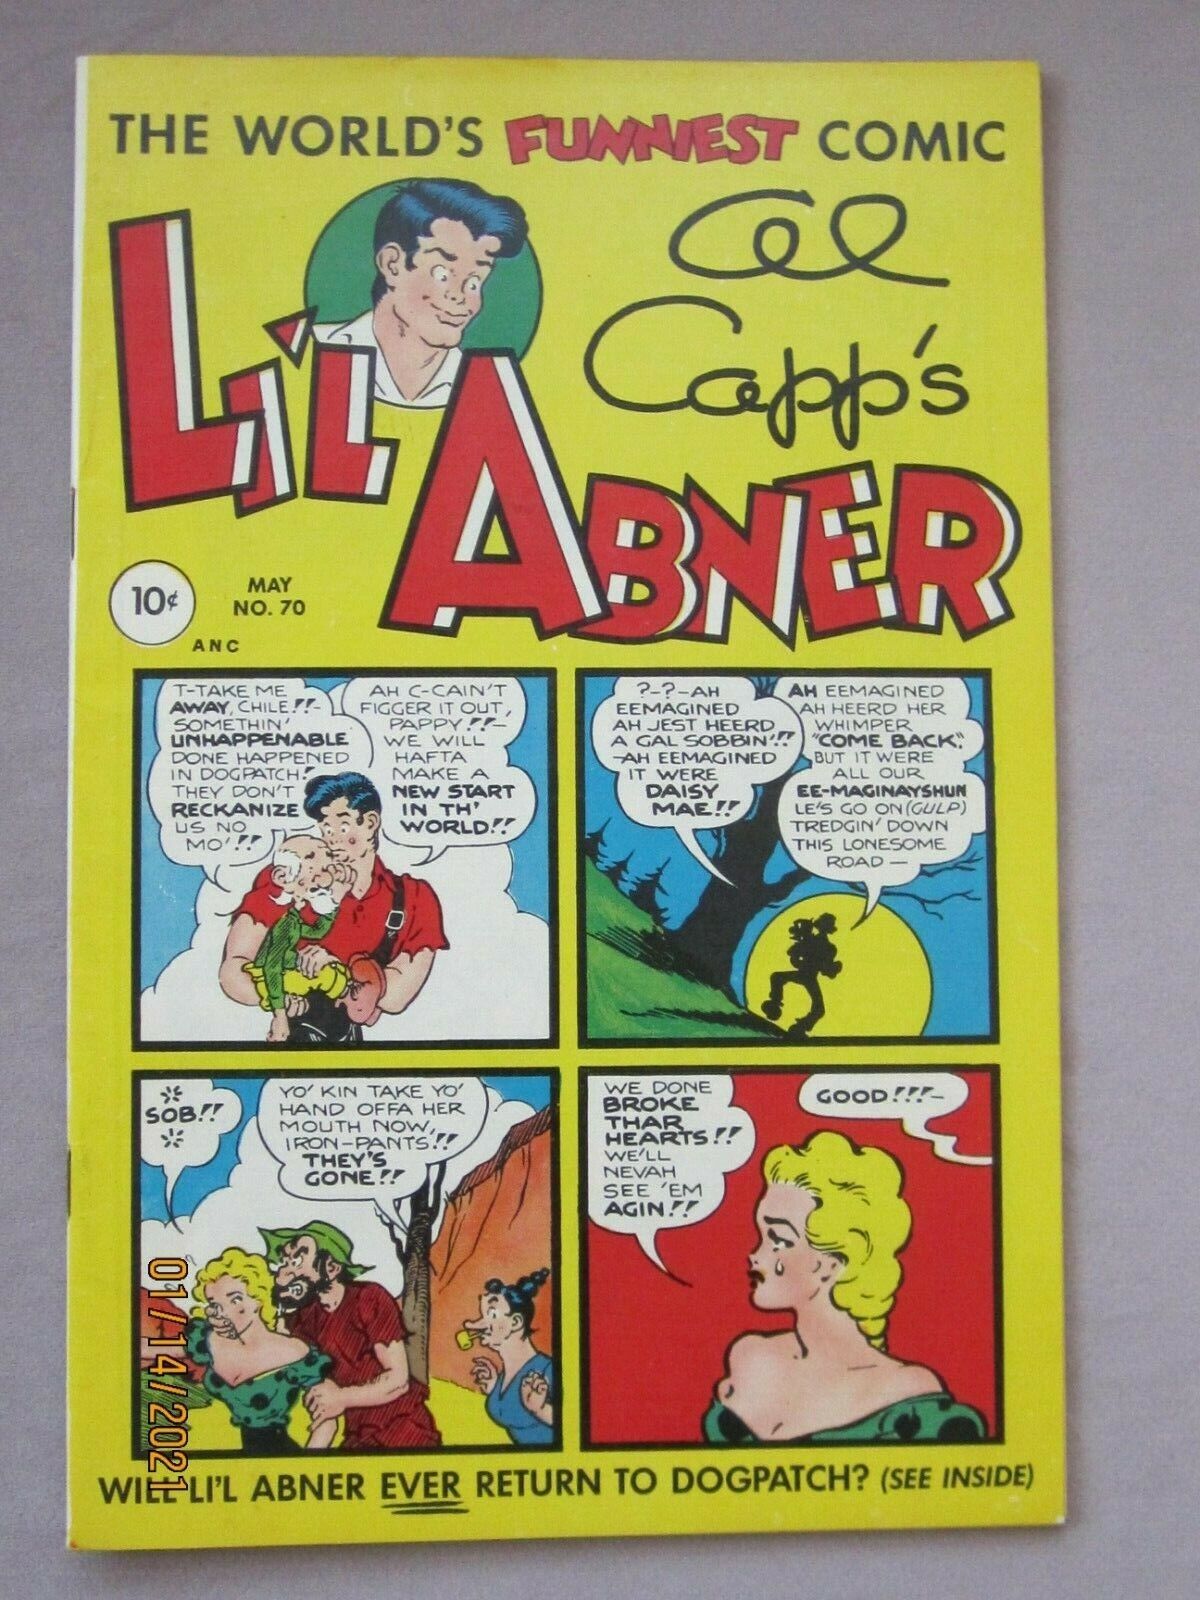 CLOSEOUT SALE LI'L ABNER COMICS #70 (MAY 1949) GOLDEN AGE - VF- 7.5